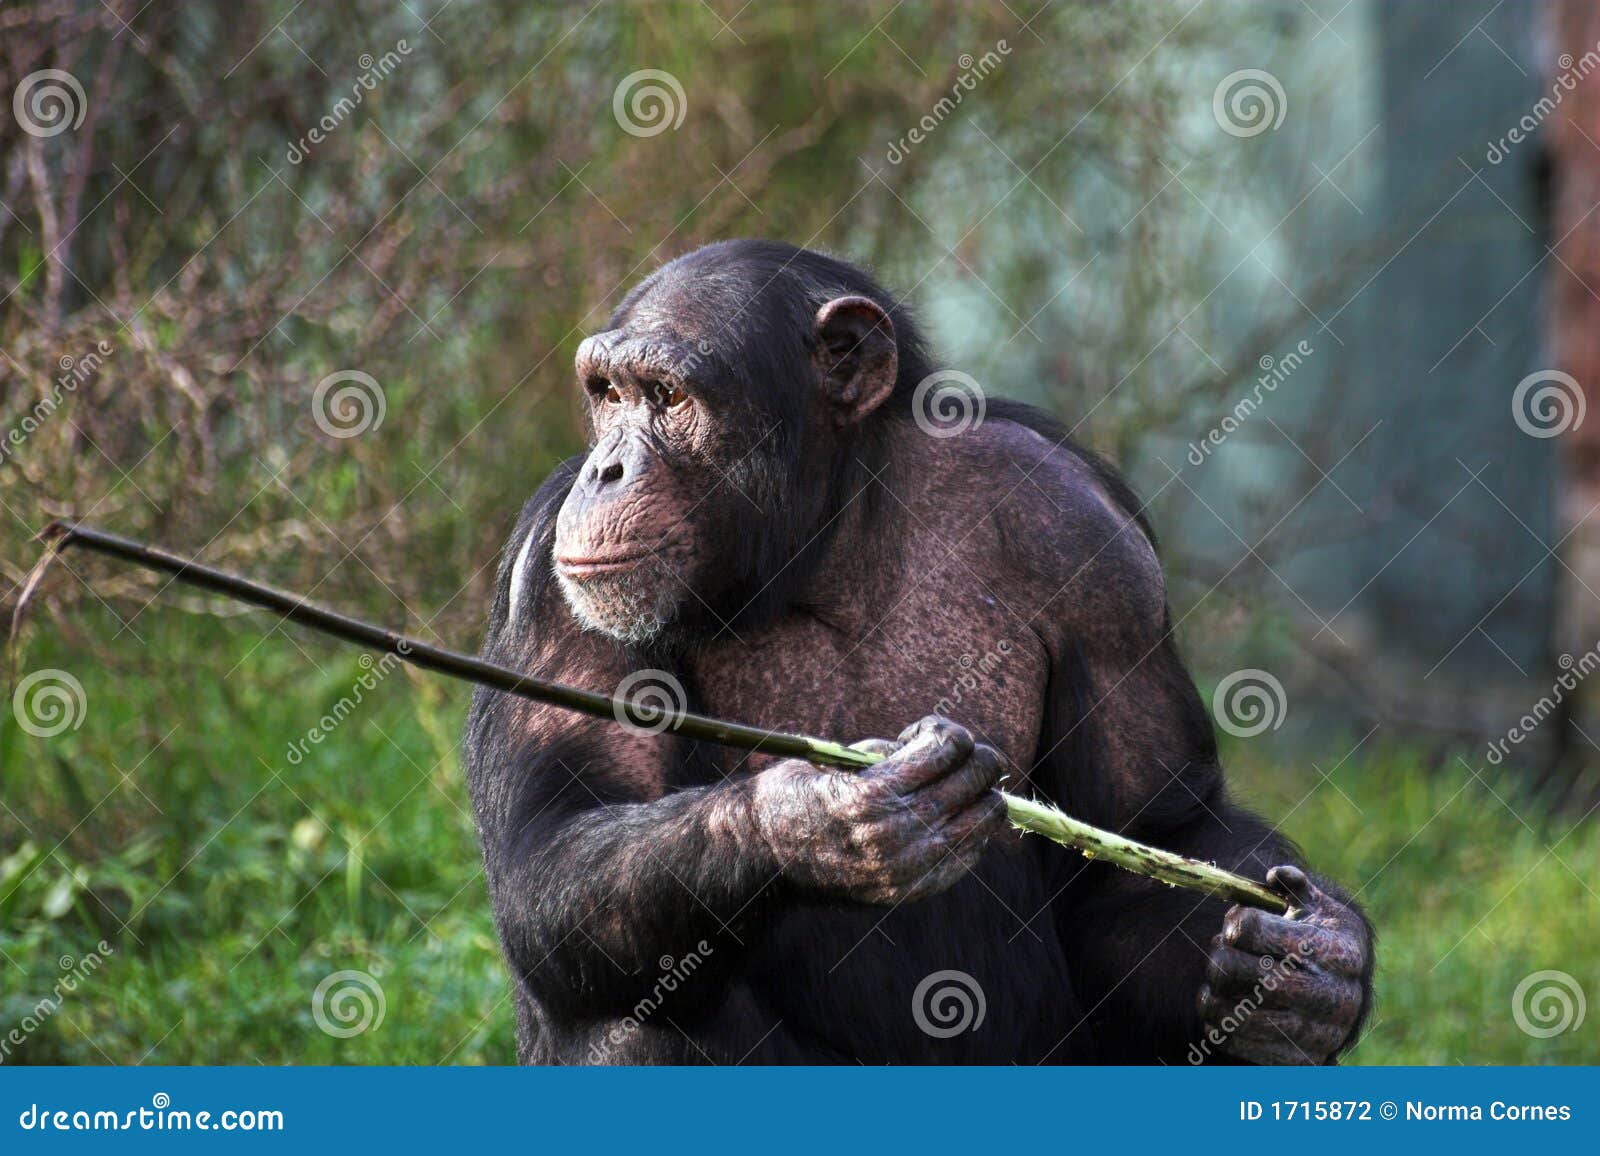 chimp using a stick